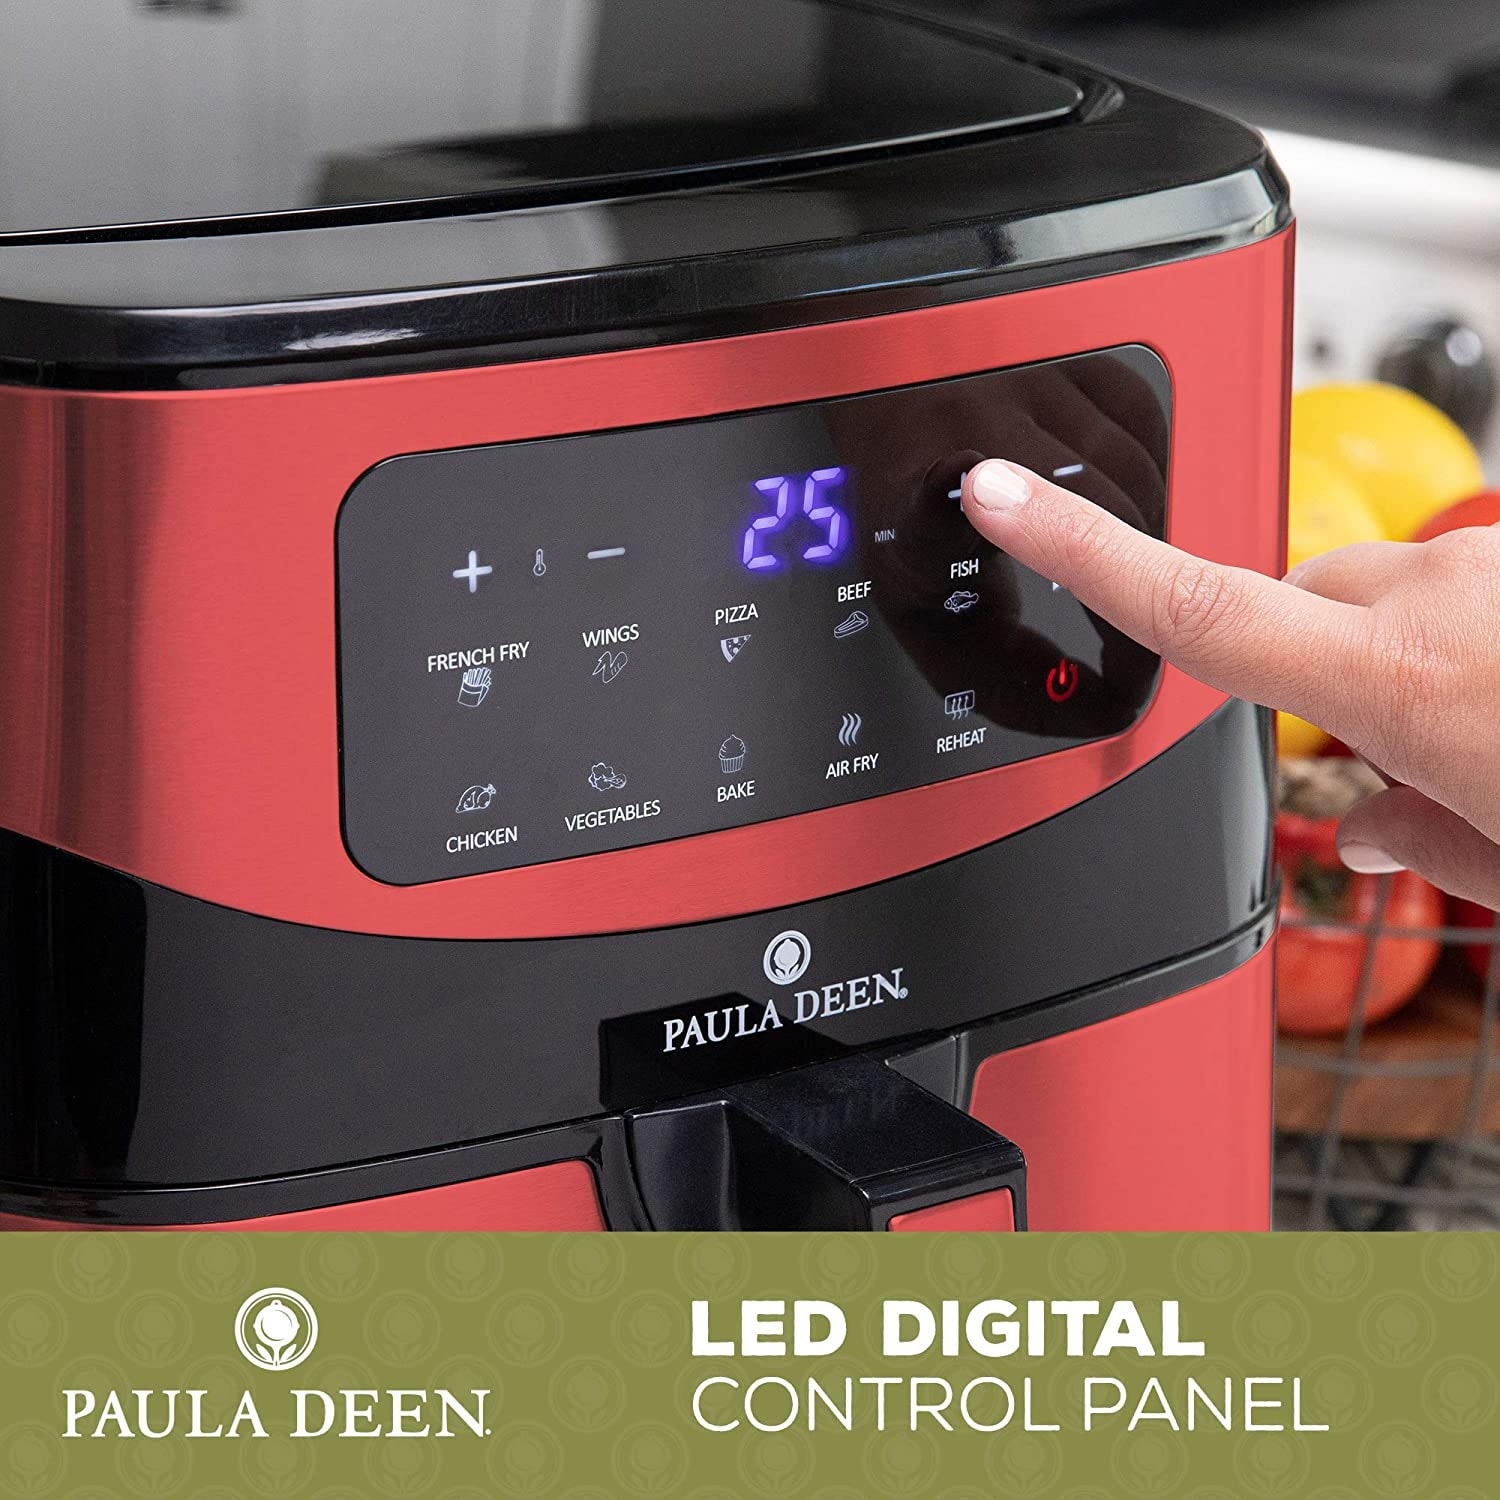 Paula Deen PDKDF579R Stainless Steel 10 QT 1700 Watts Digital LED